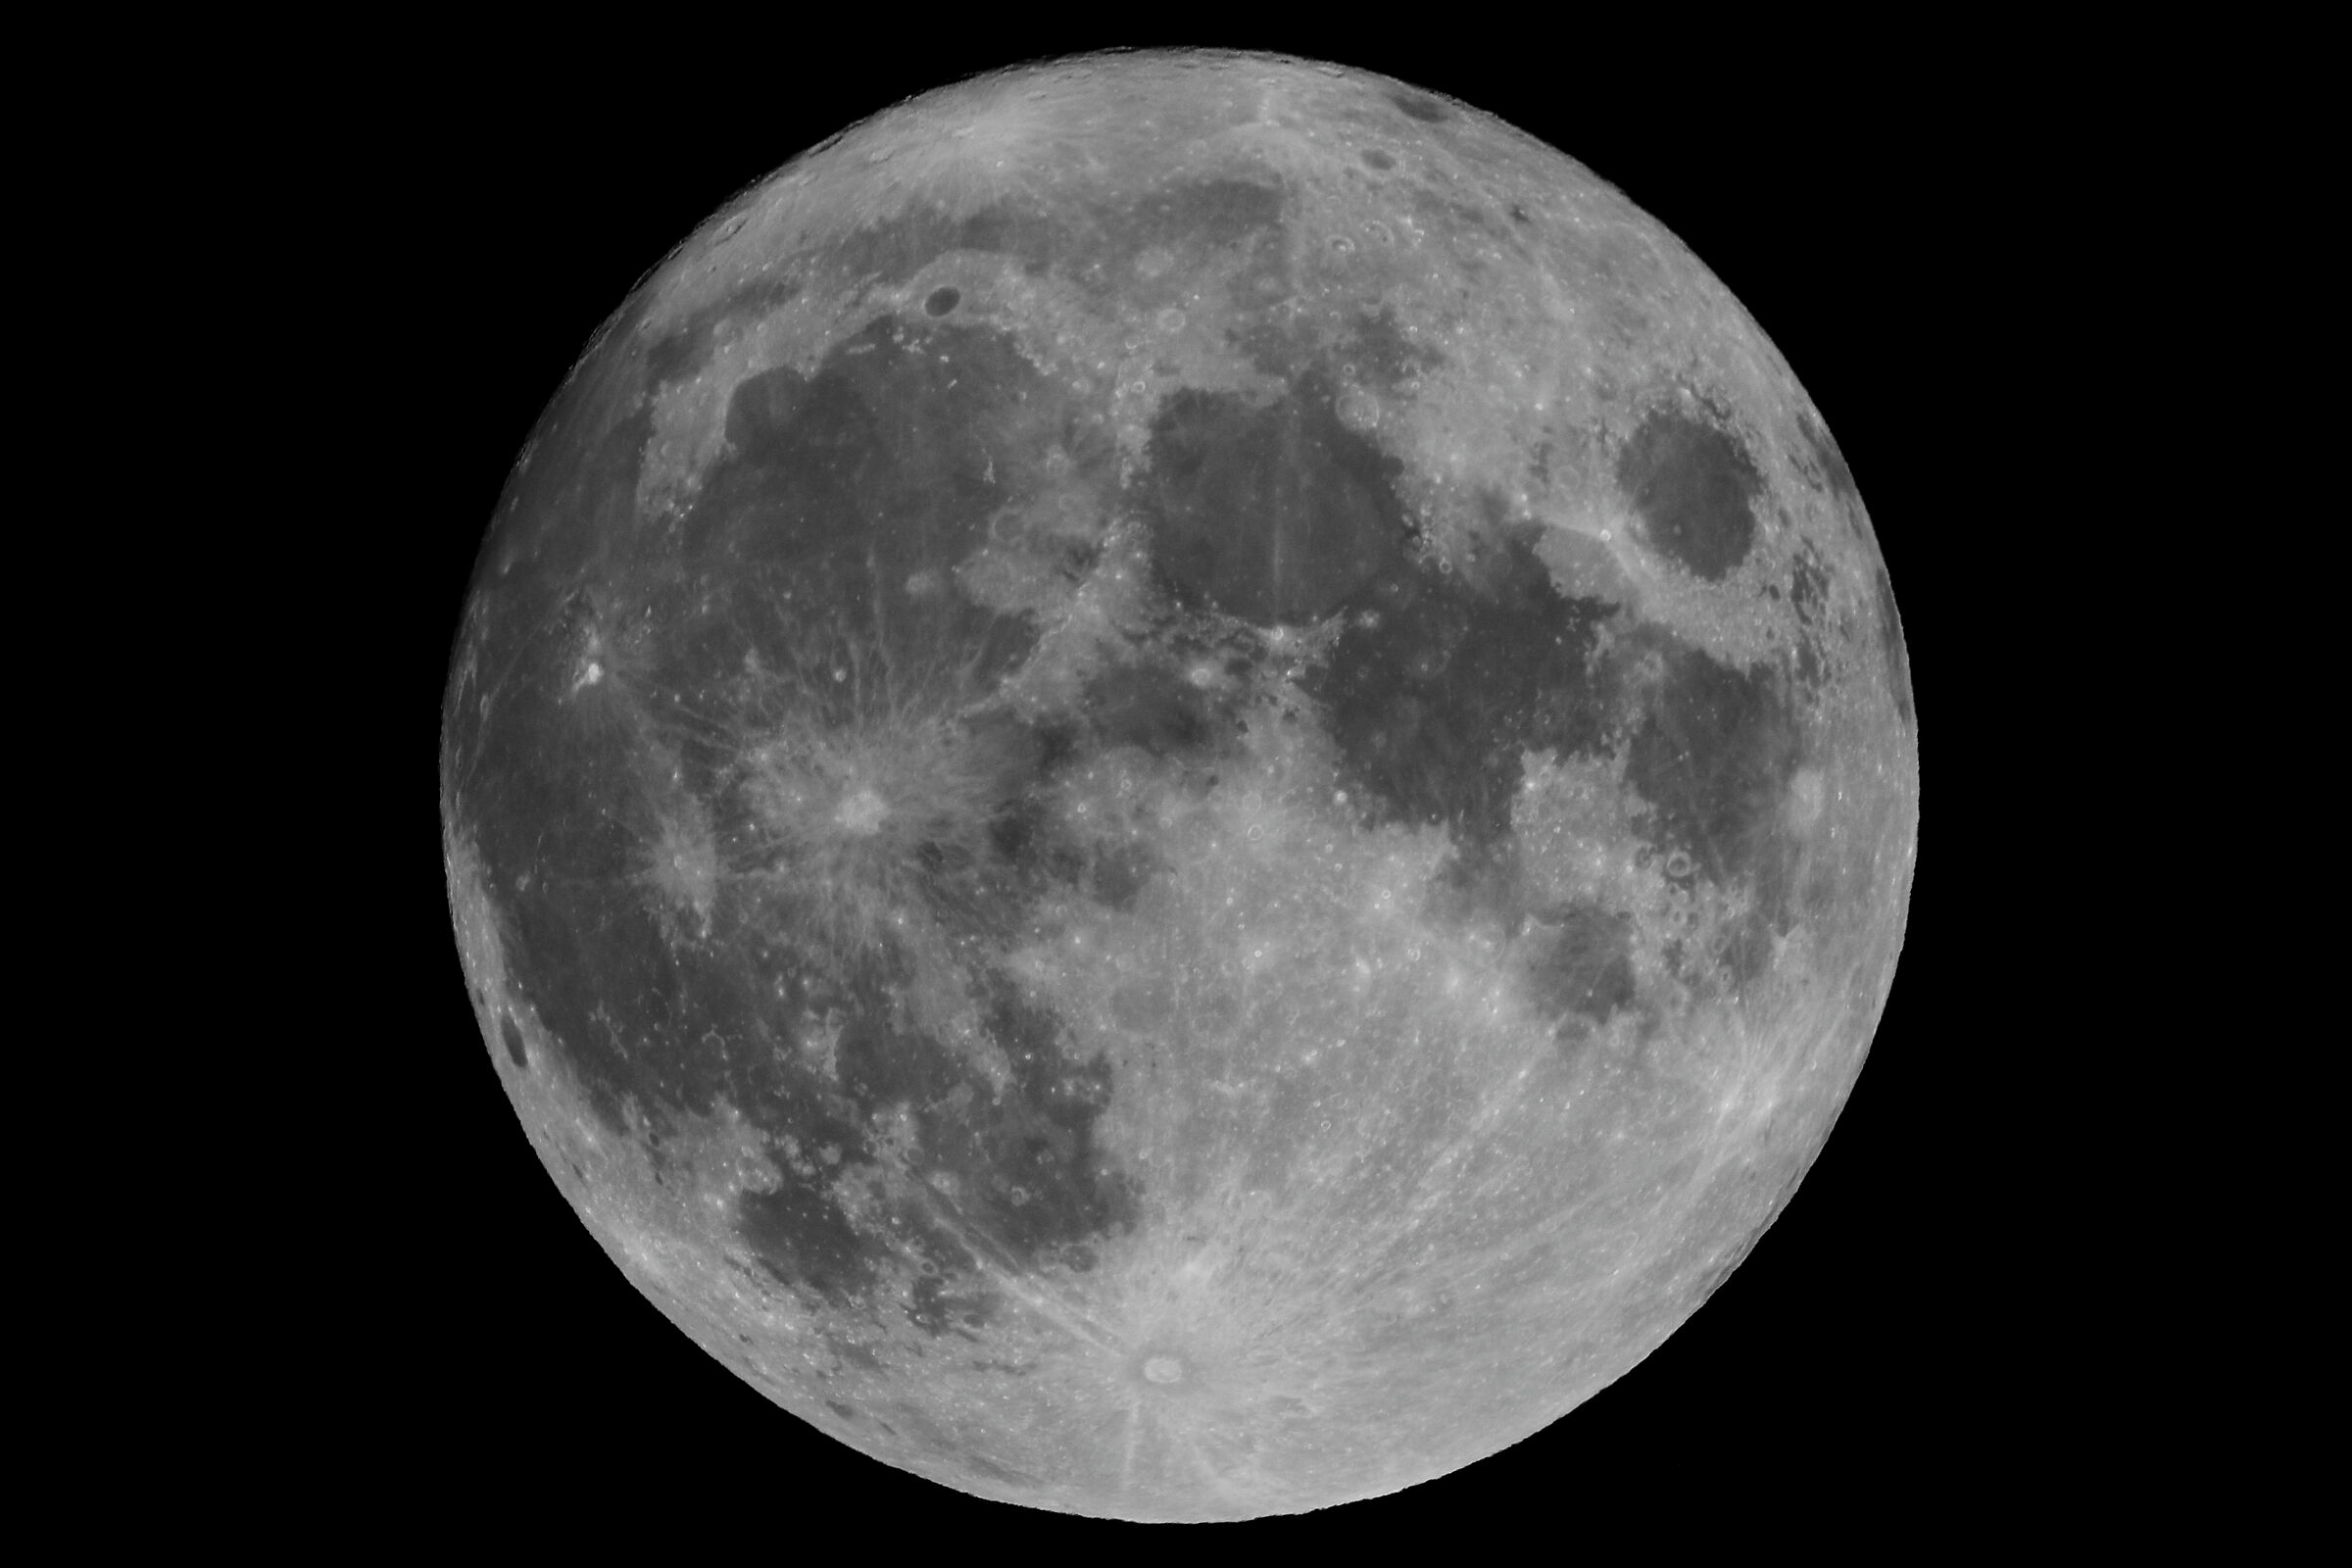 Tonight's moon (September 20, 2021 at 9 pm)...